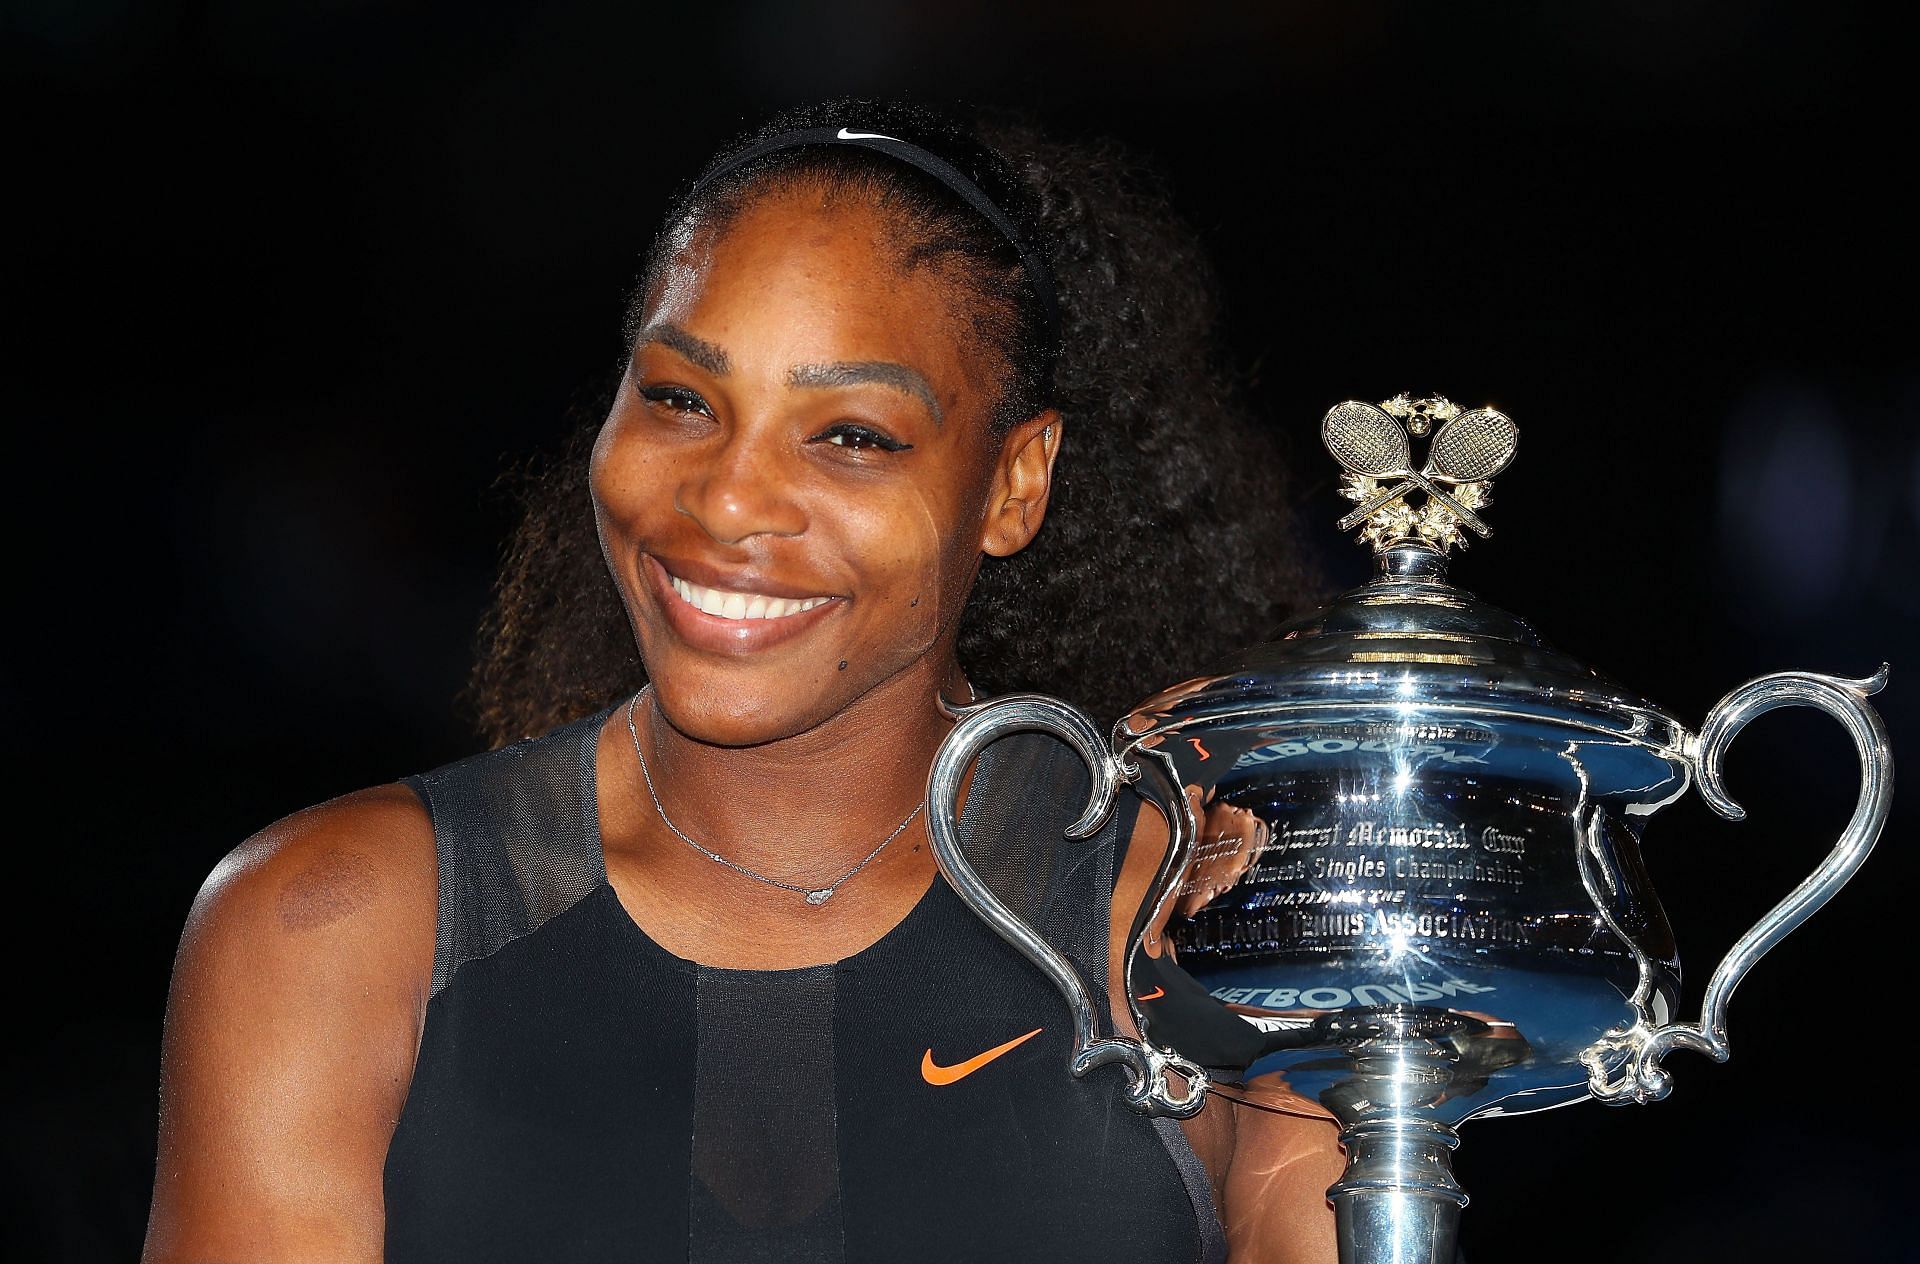 Serena with the 2017 Australian Open trophy - her last Grand Slam win thus far